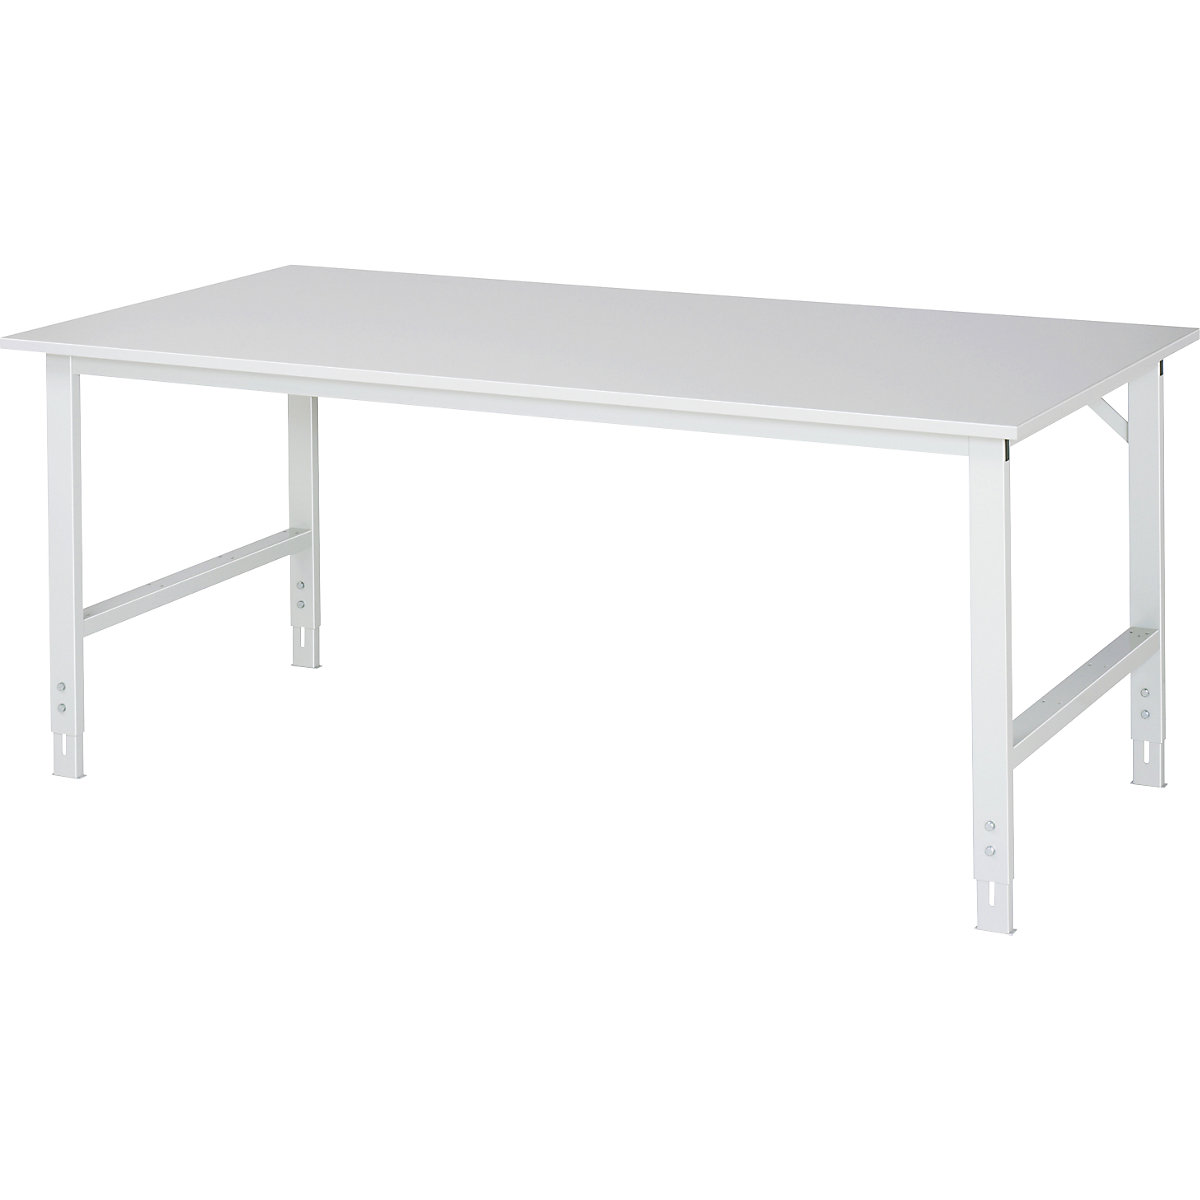 Work table – RAU, height 770 – 1090 mm, base 1900 x 860 mm-1